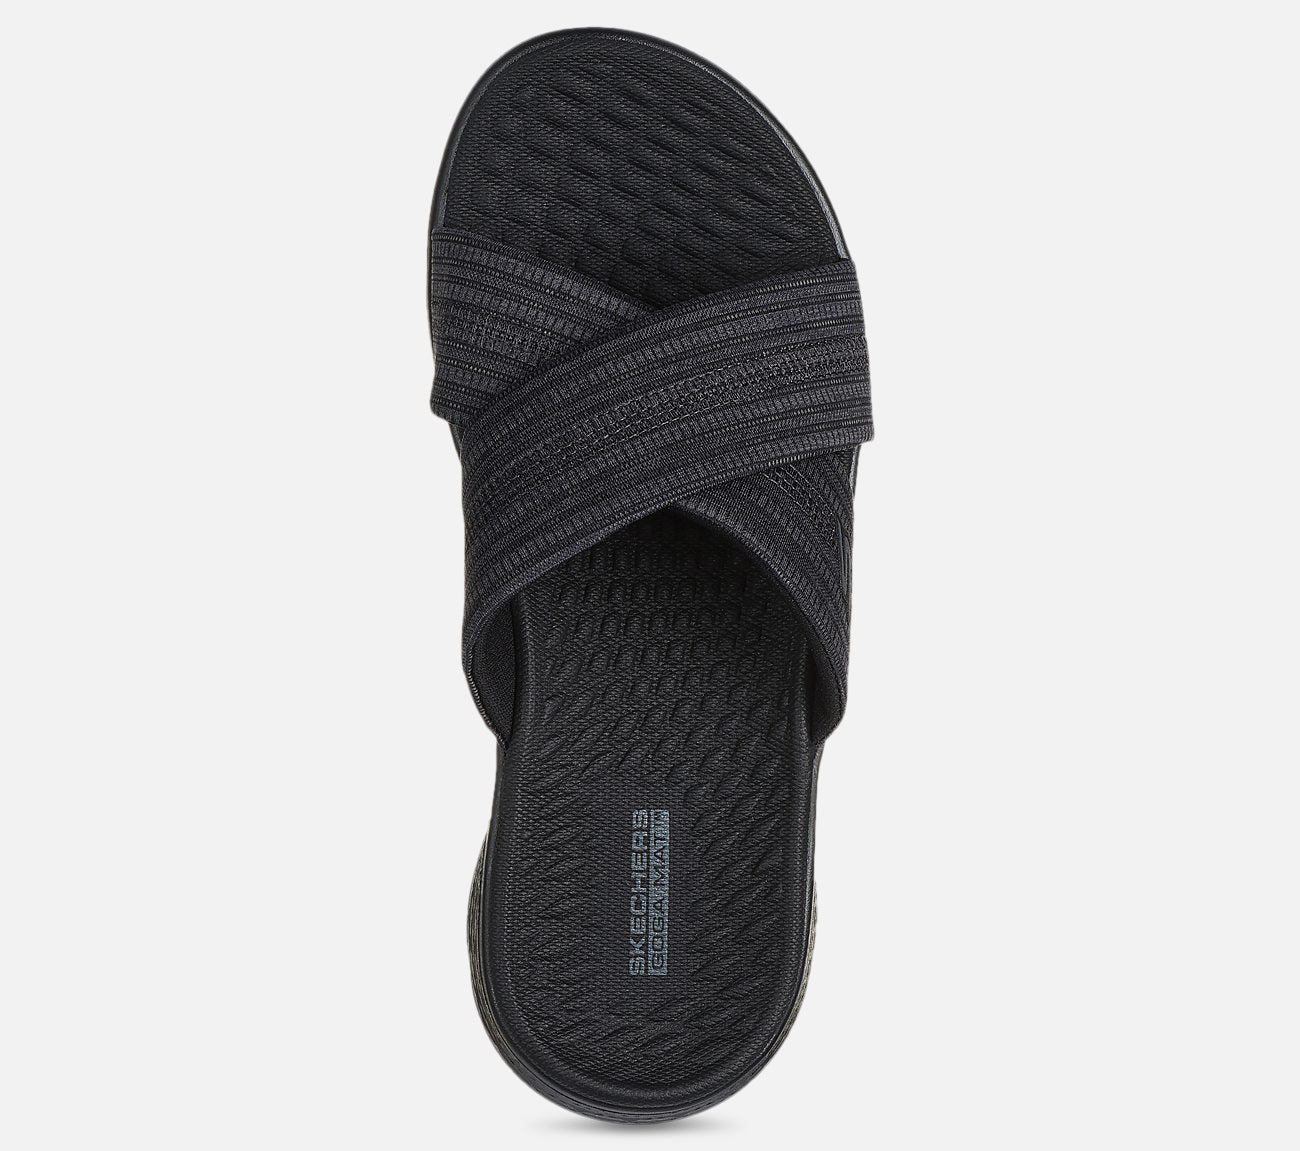 GO WALK Flex - Impressed Sandal Skechers